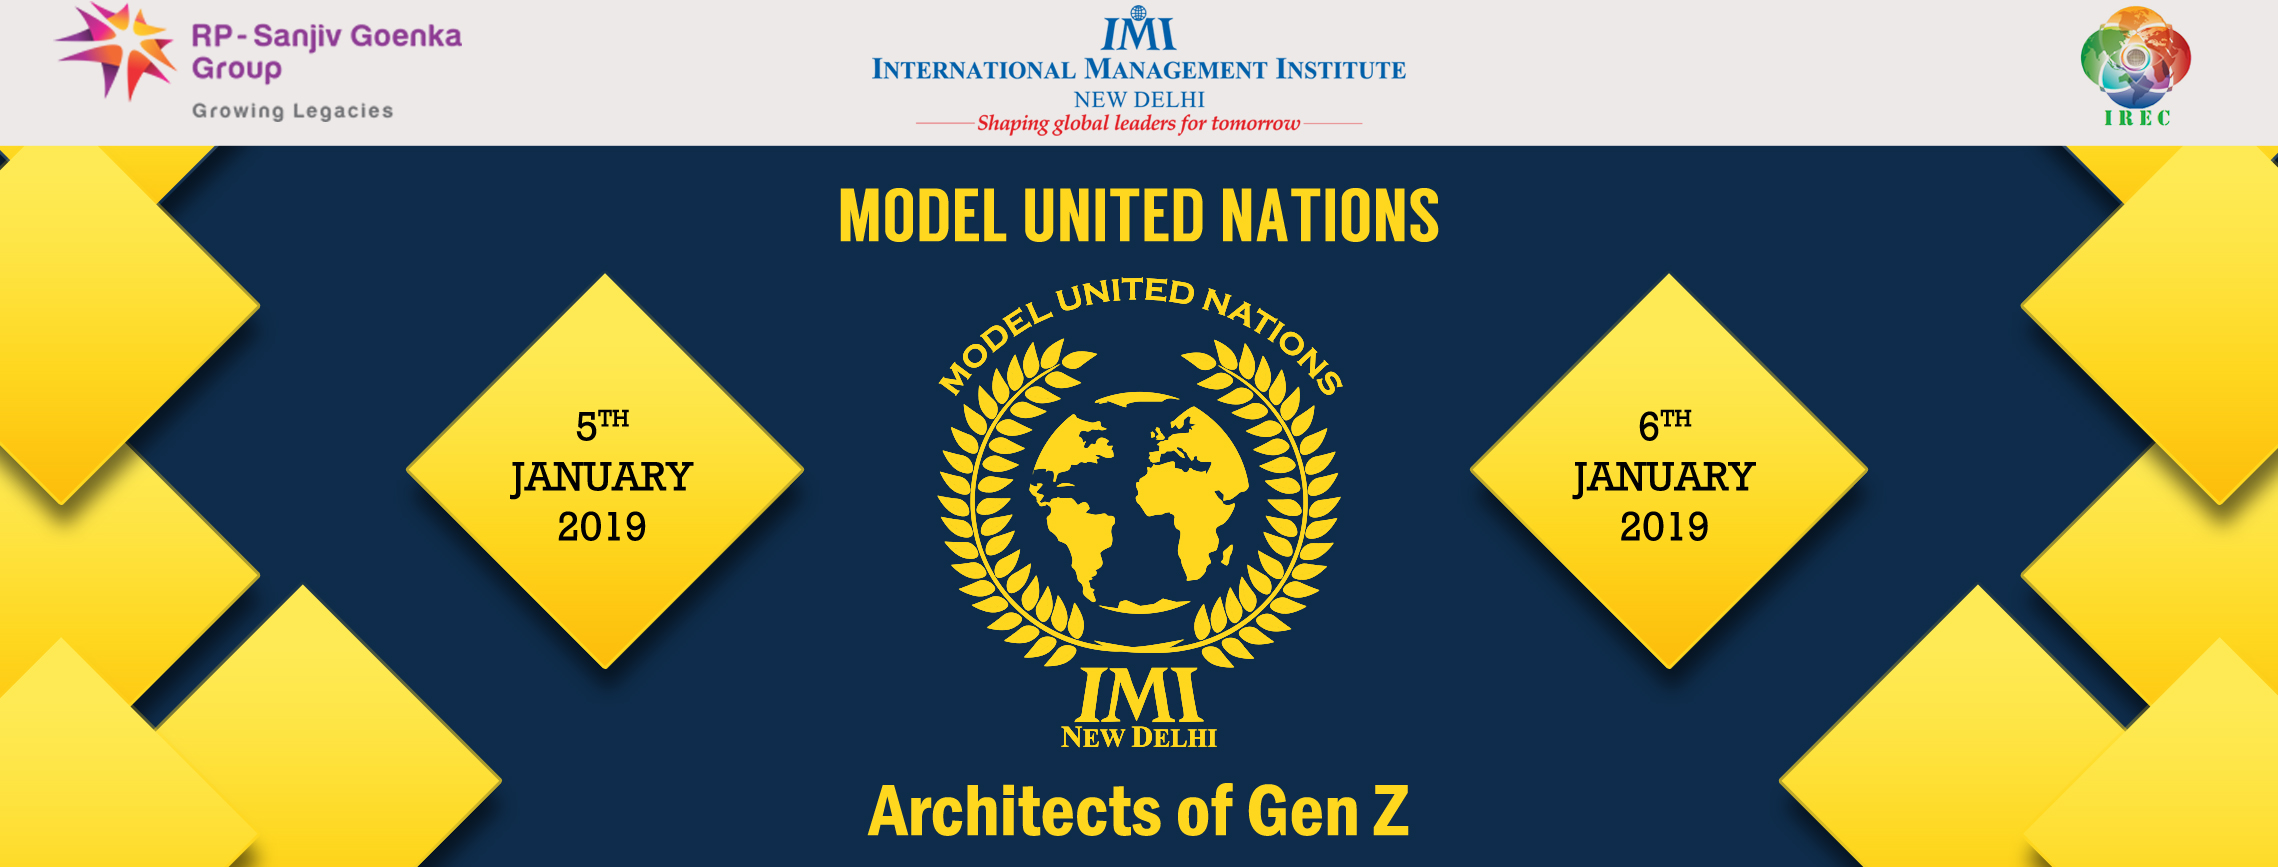 MODEL UNITED NATIONS 2019